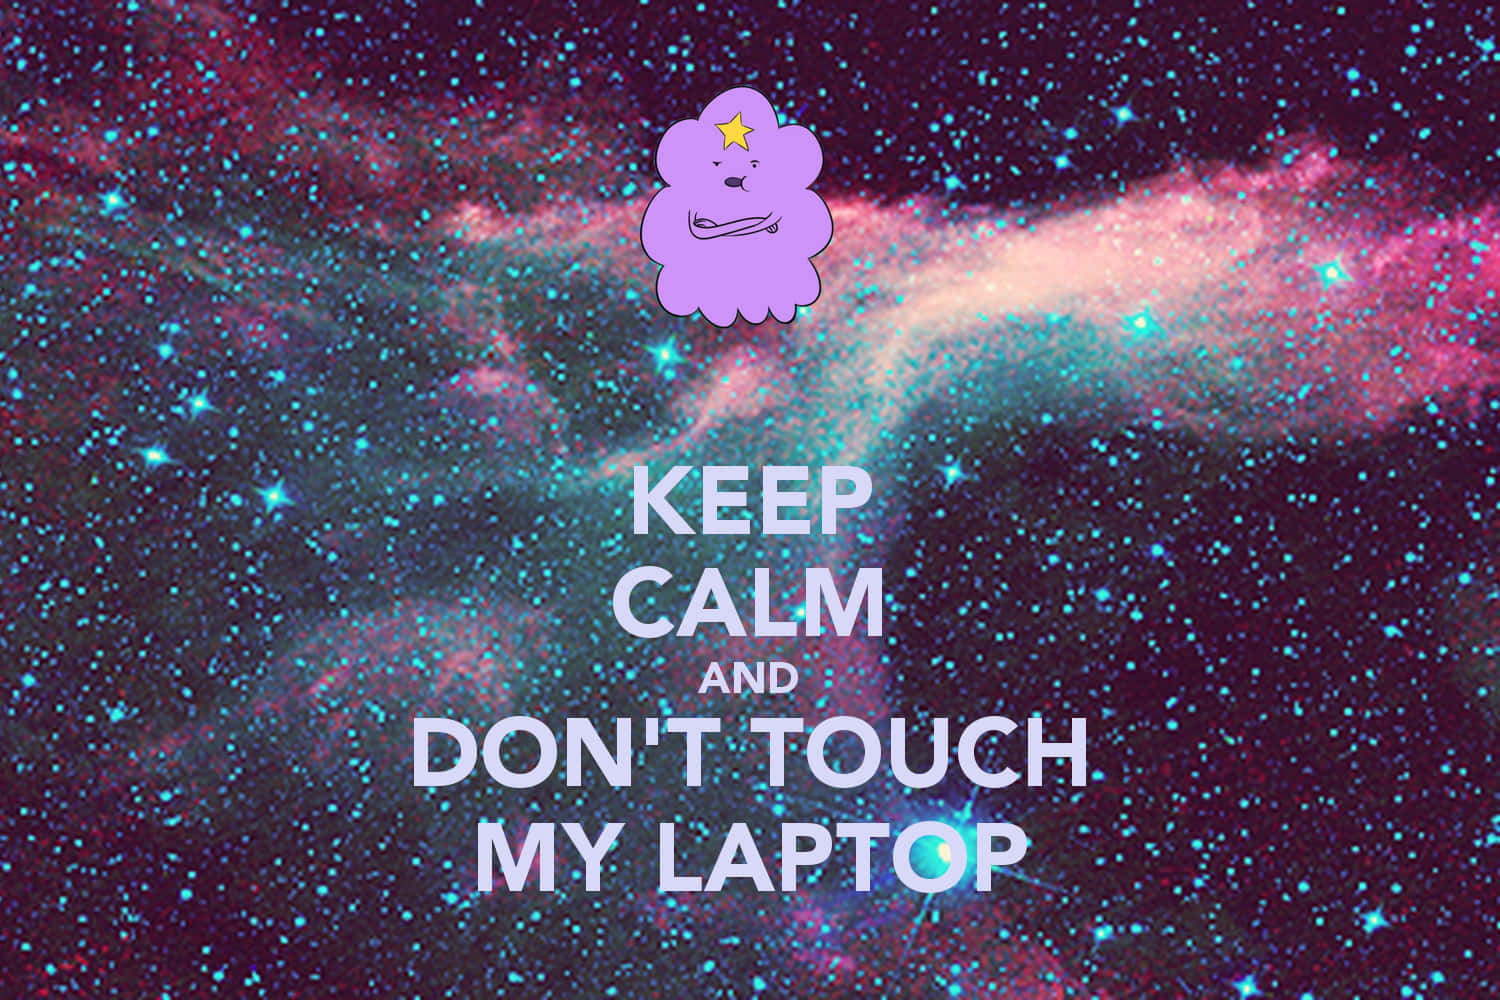 lumpy space princess wallpaper desktop